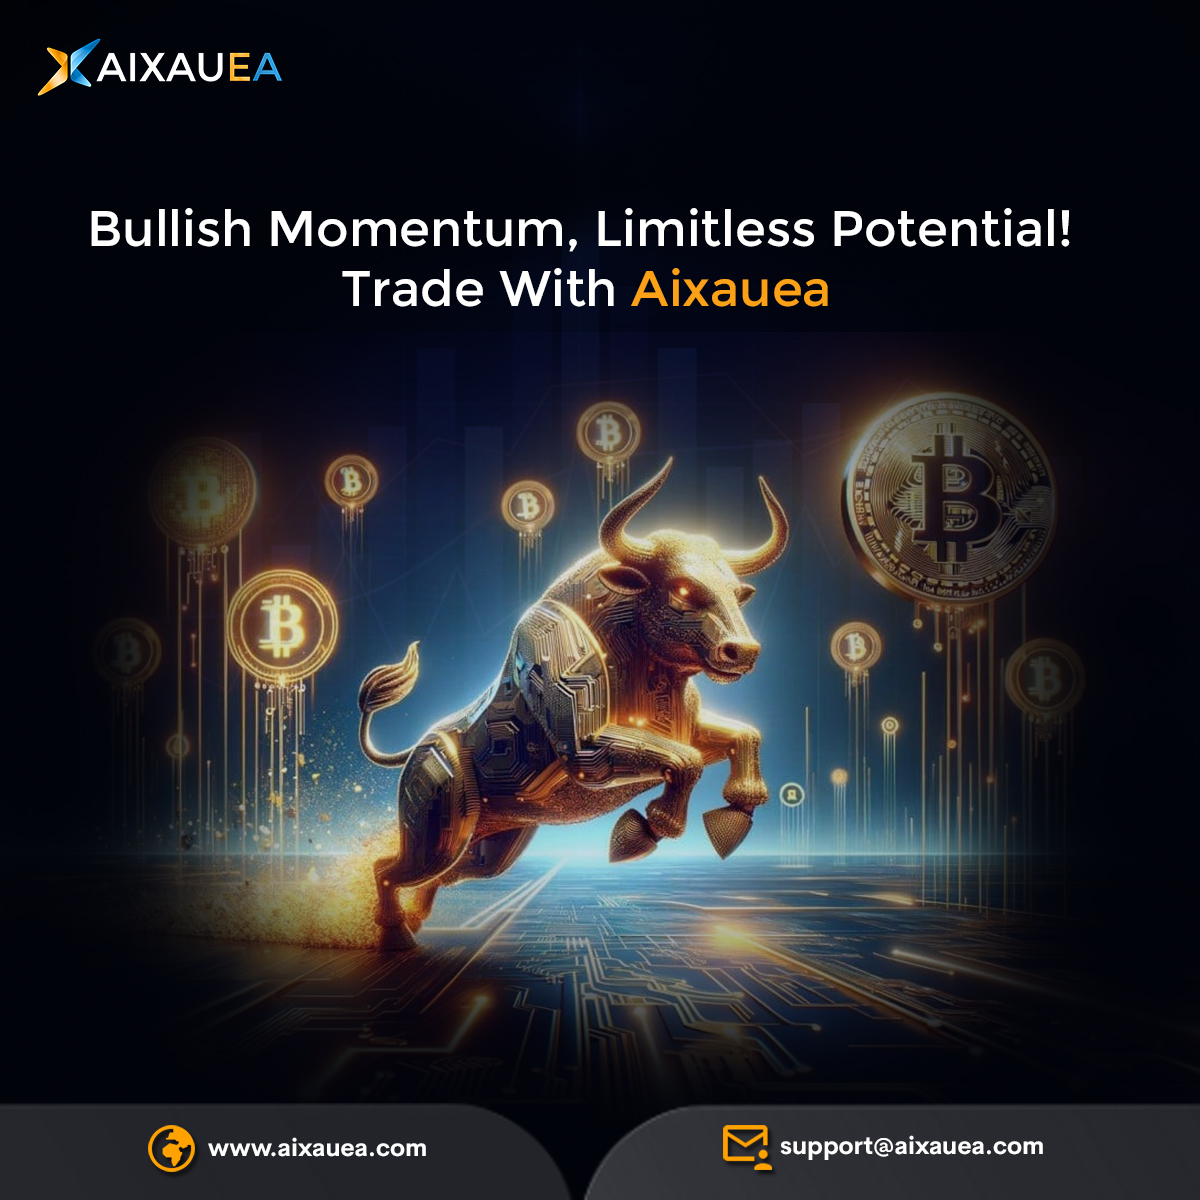 🚀 Feeling the crypto bullish momentum! 📈  #CryptoBullRun #BullishMomentum #ToTheMoon #Cryptocurrency #InvestingJourney

support@aixauea.com
aixauea.com

Follow:
facebook.com/aixauea
instagram.com/aixauea/
x.com/aixauea

 #aixauea #cryptoearning